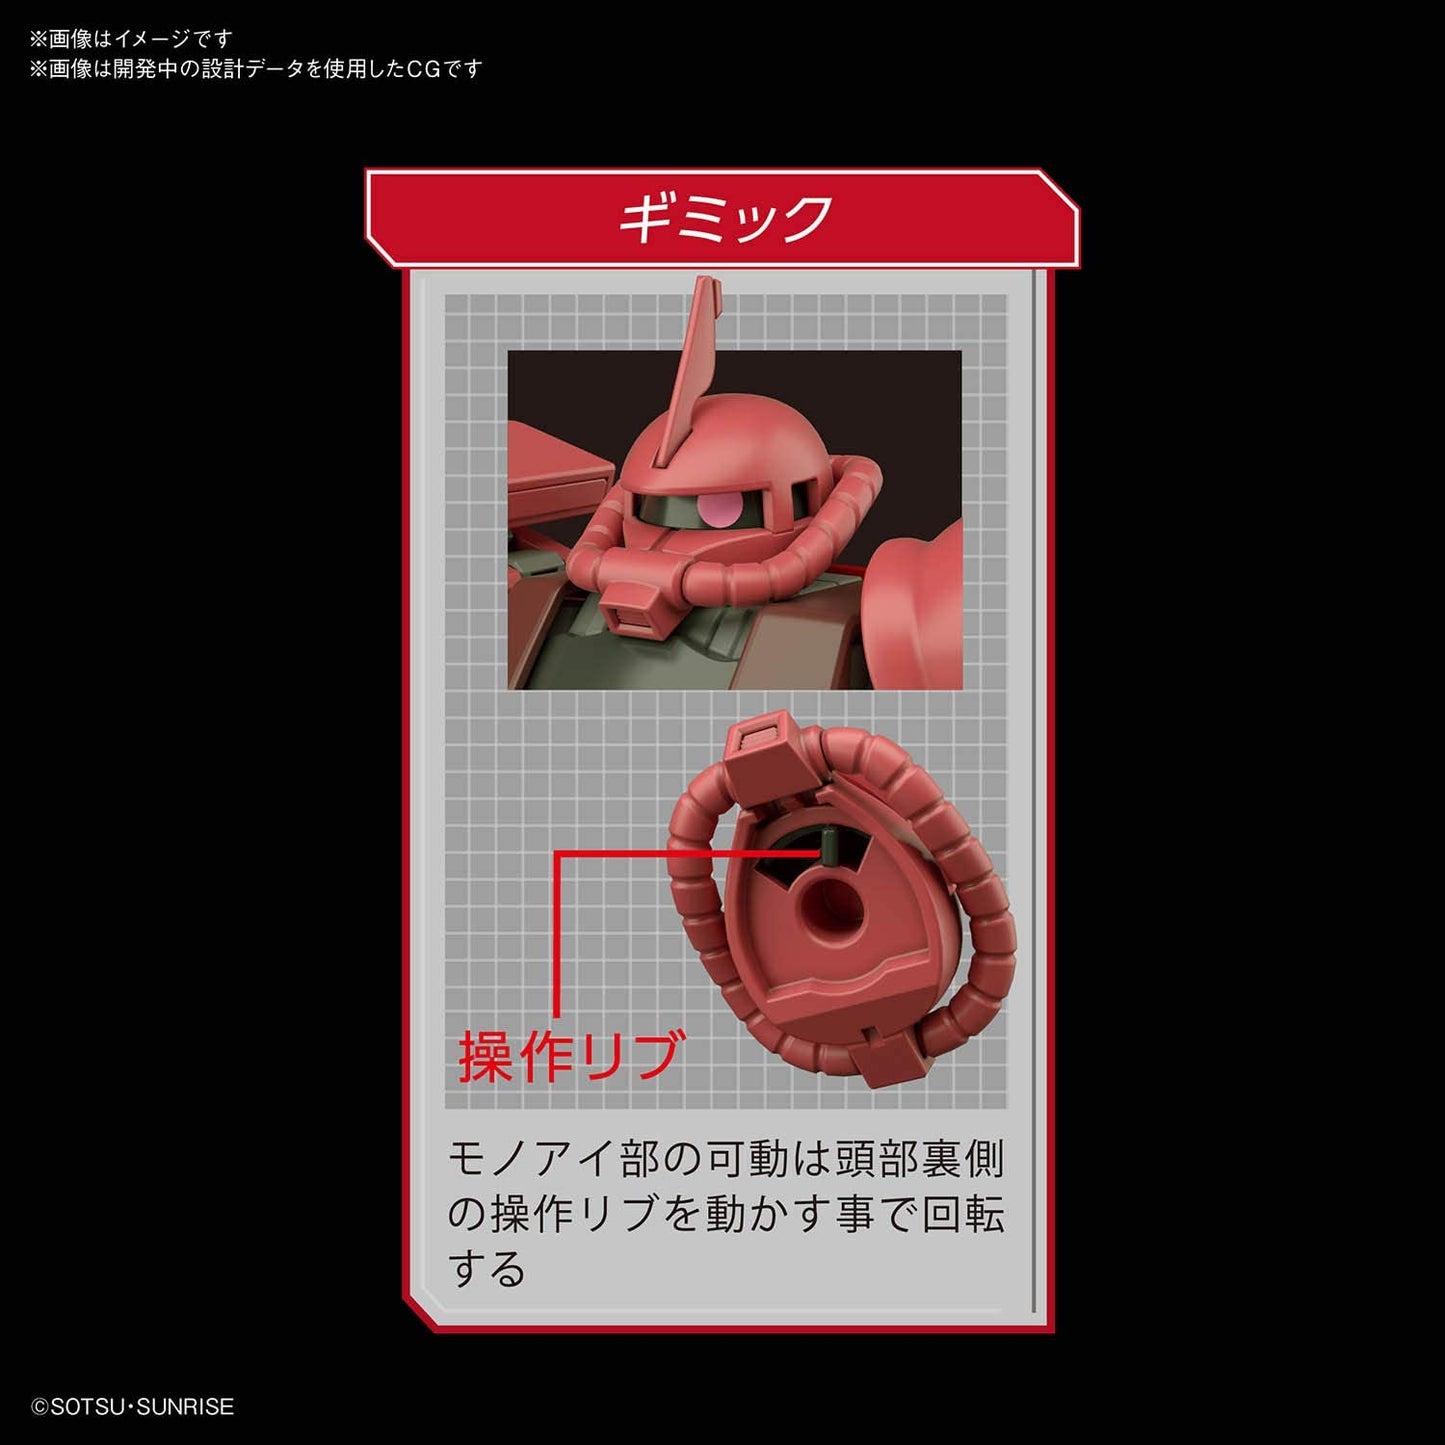 HGUC 1/144 Char's Zaku II Plastic Model "Mobile Suit Gundam" | animota